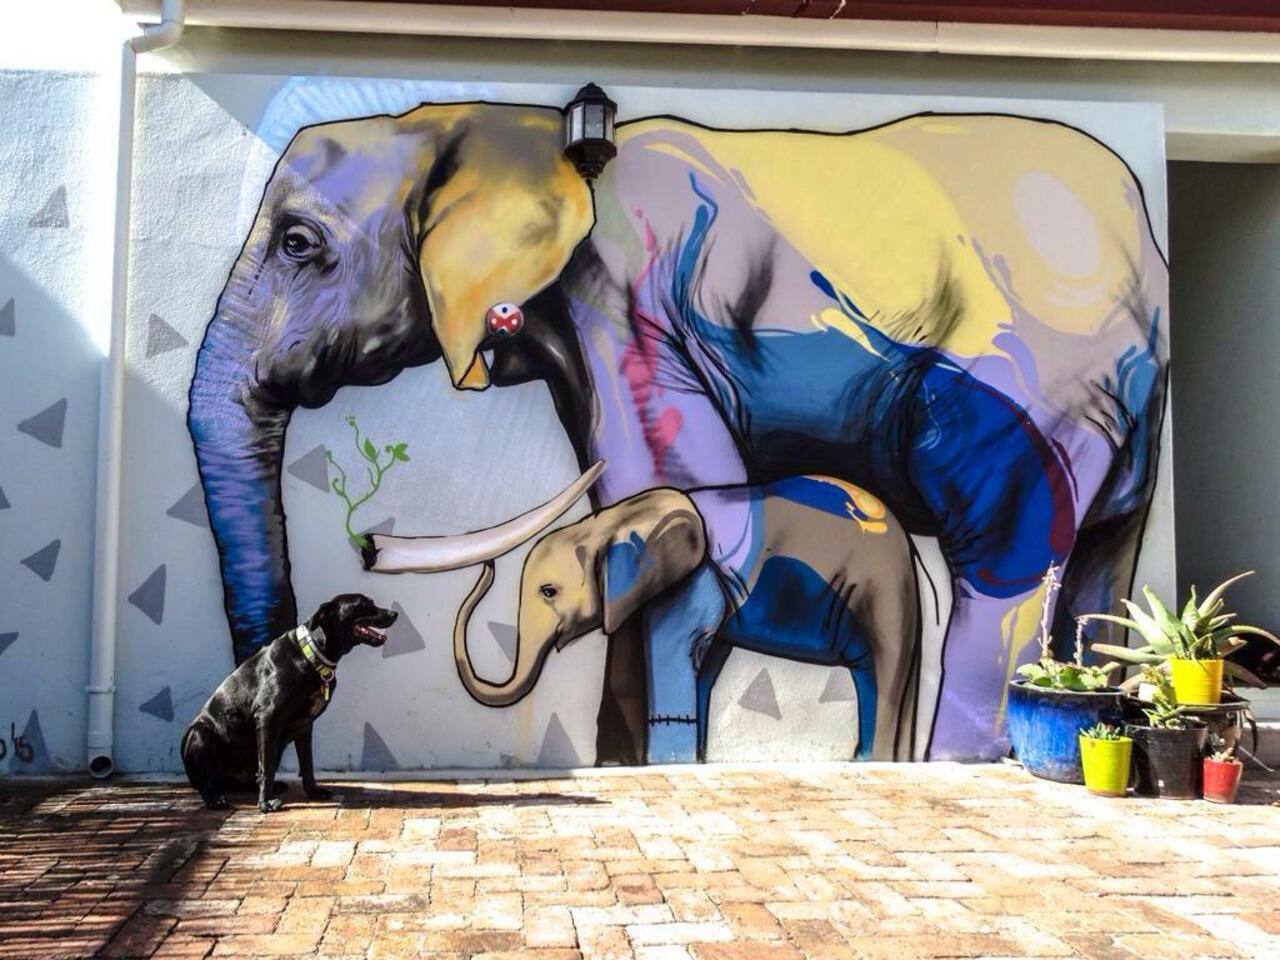 Latest nature in Street Art piece by Falko Paints In Cape Town

#art #mural #graffiti #streetart http://t.co/Zq6Ic5A7GL